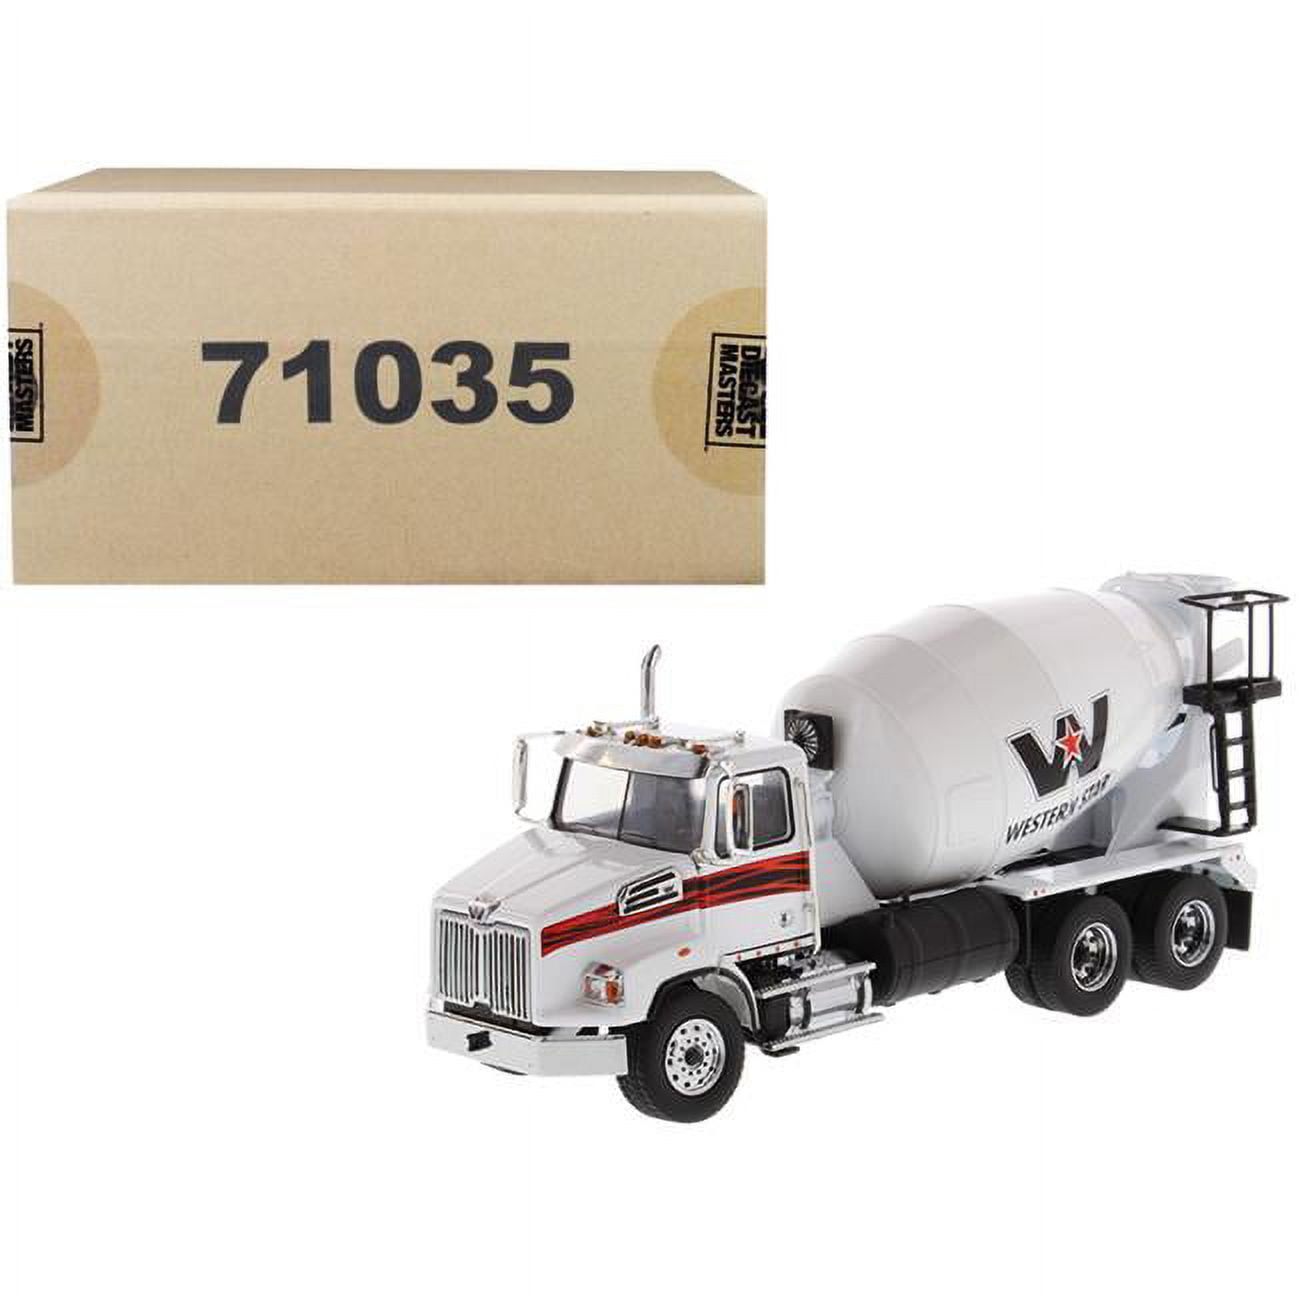 71035 Western Star 4700 Sb Concrete Mixer Truck White 1-50 Diecast Model